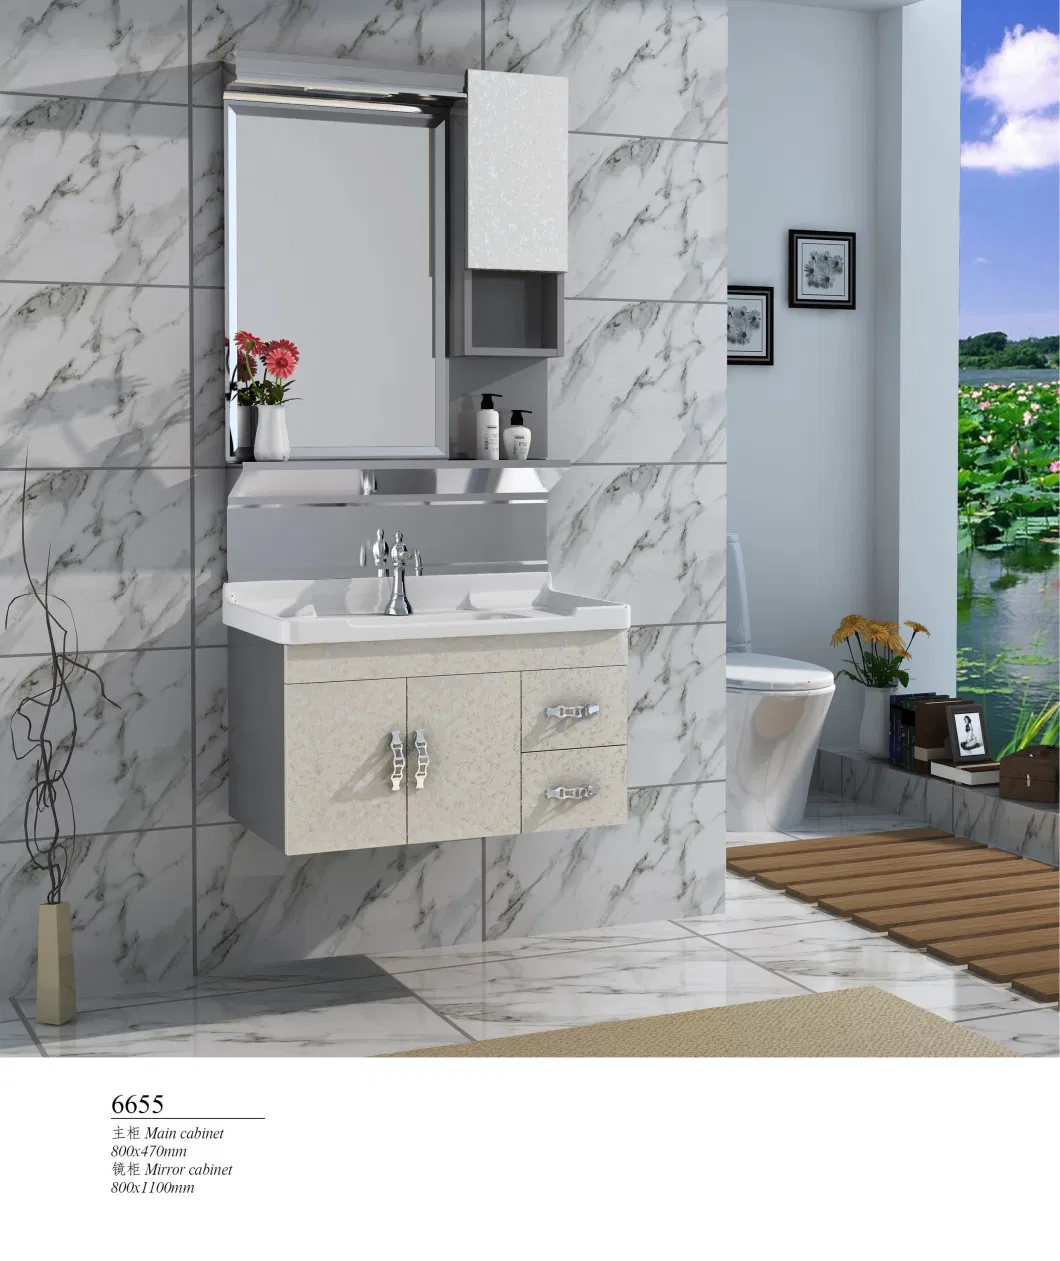 Vanity Wall Stainless Steel Modern Hotel Home Furniture Bathroom Cabinets